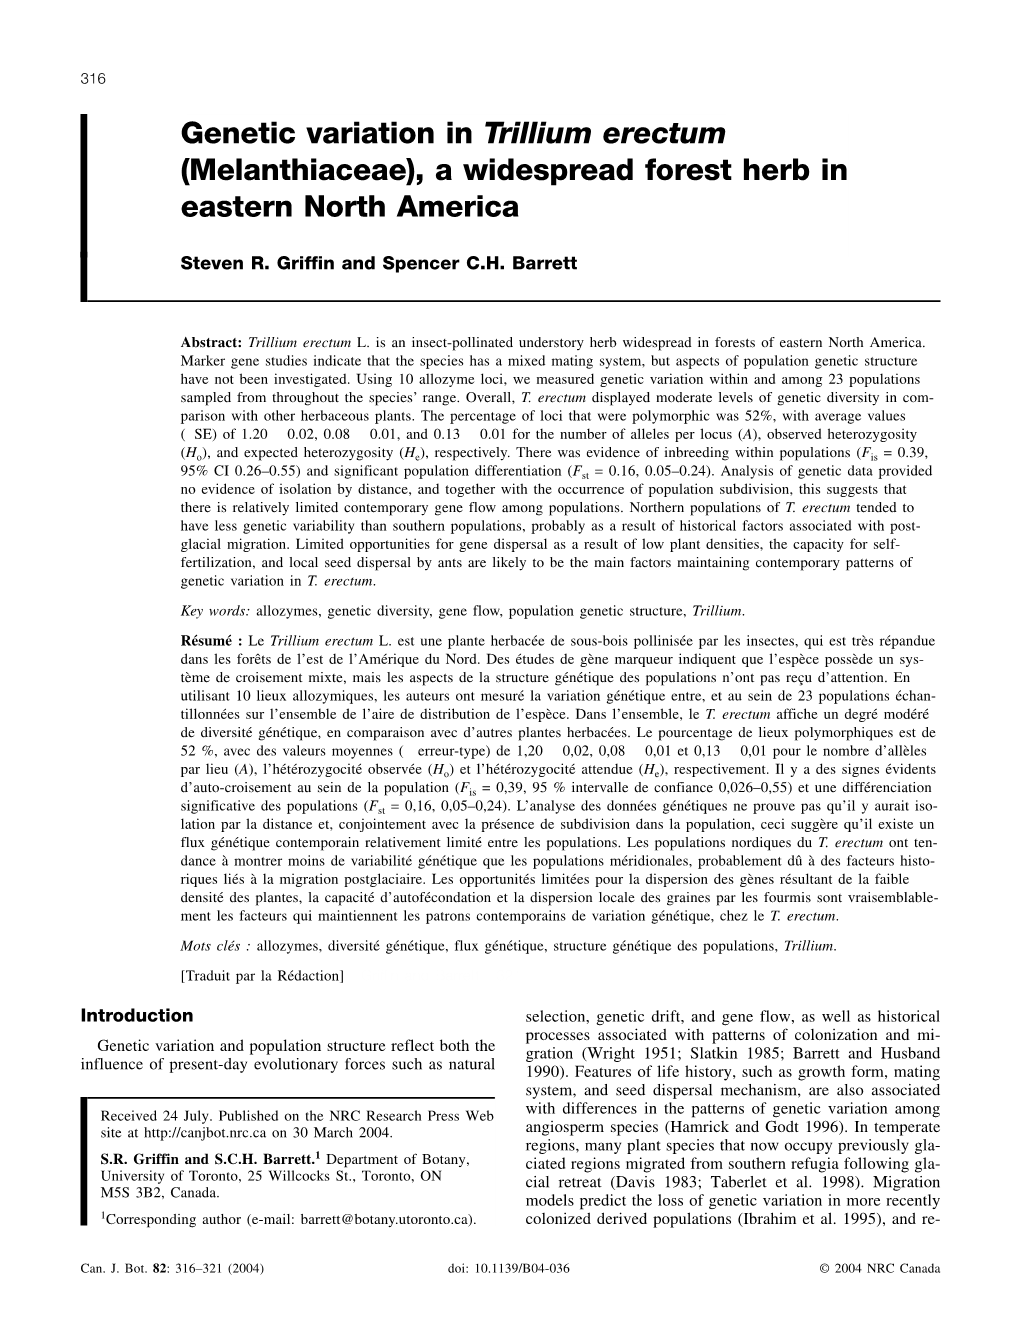 Genetic Variation in Trillium Erectum (Melanthiaceae), a Widespread Forest Herb in Eastern North America